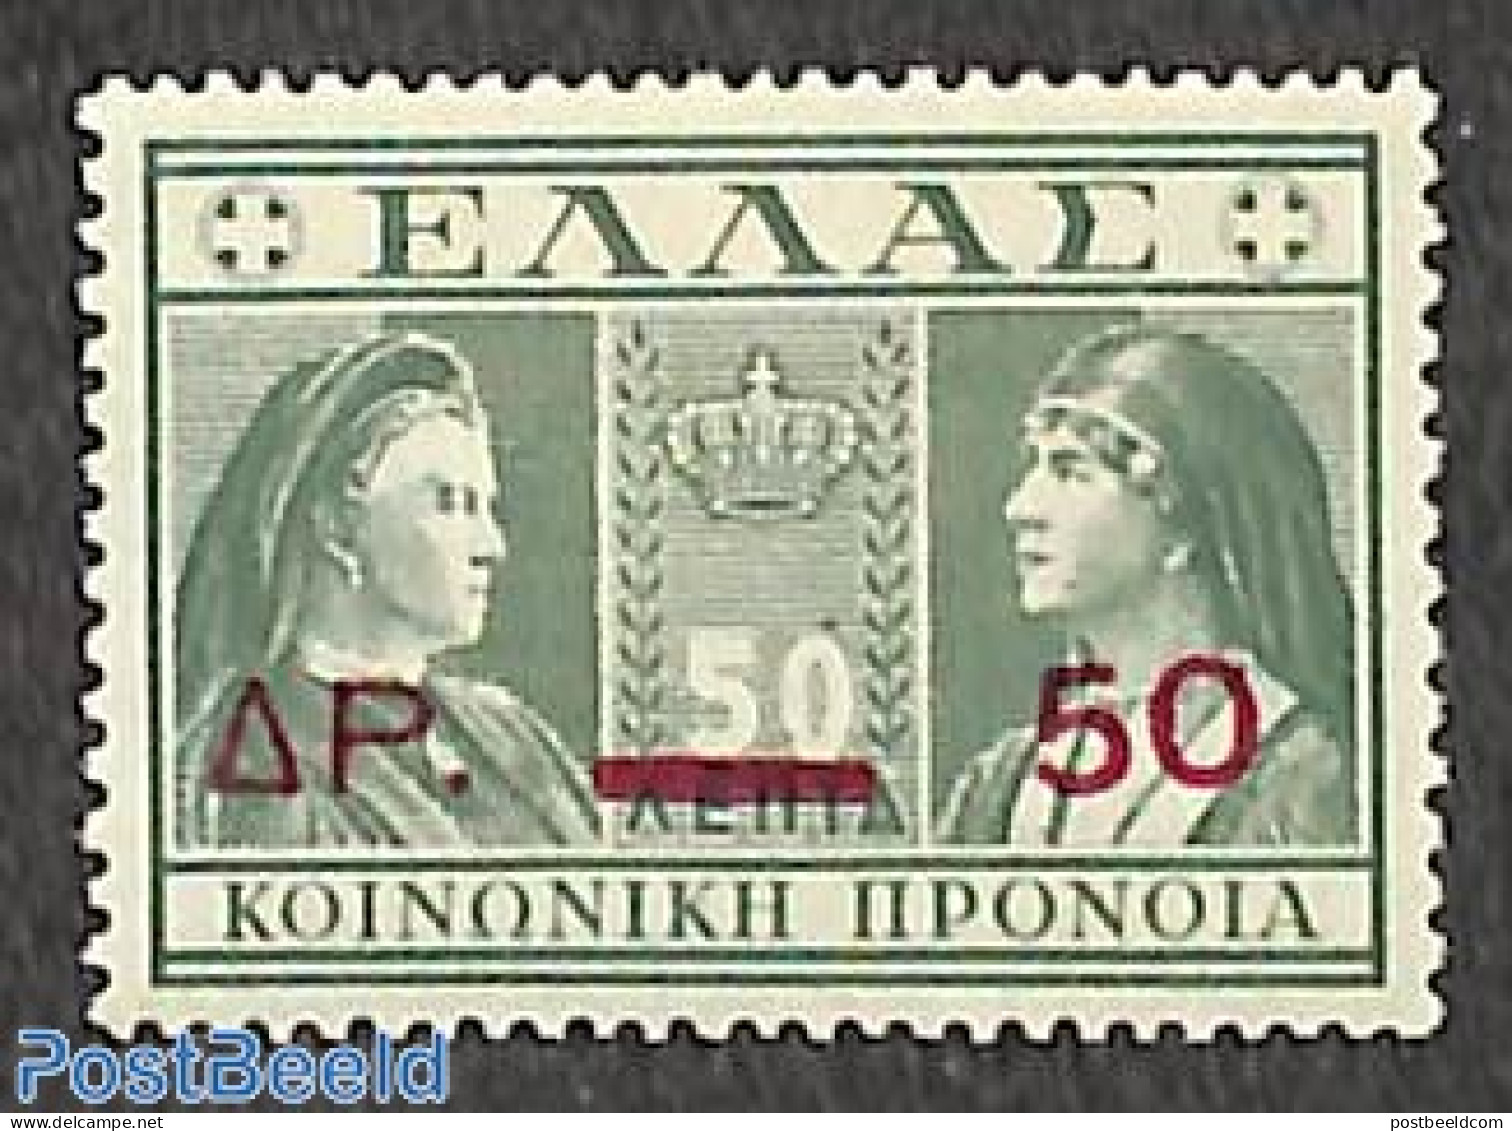 Greece 1947 Welfare Stamp 50Dr On 50L 1v, Mint NH - Neufs